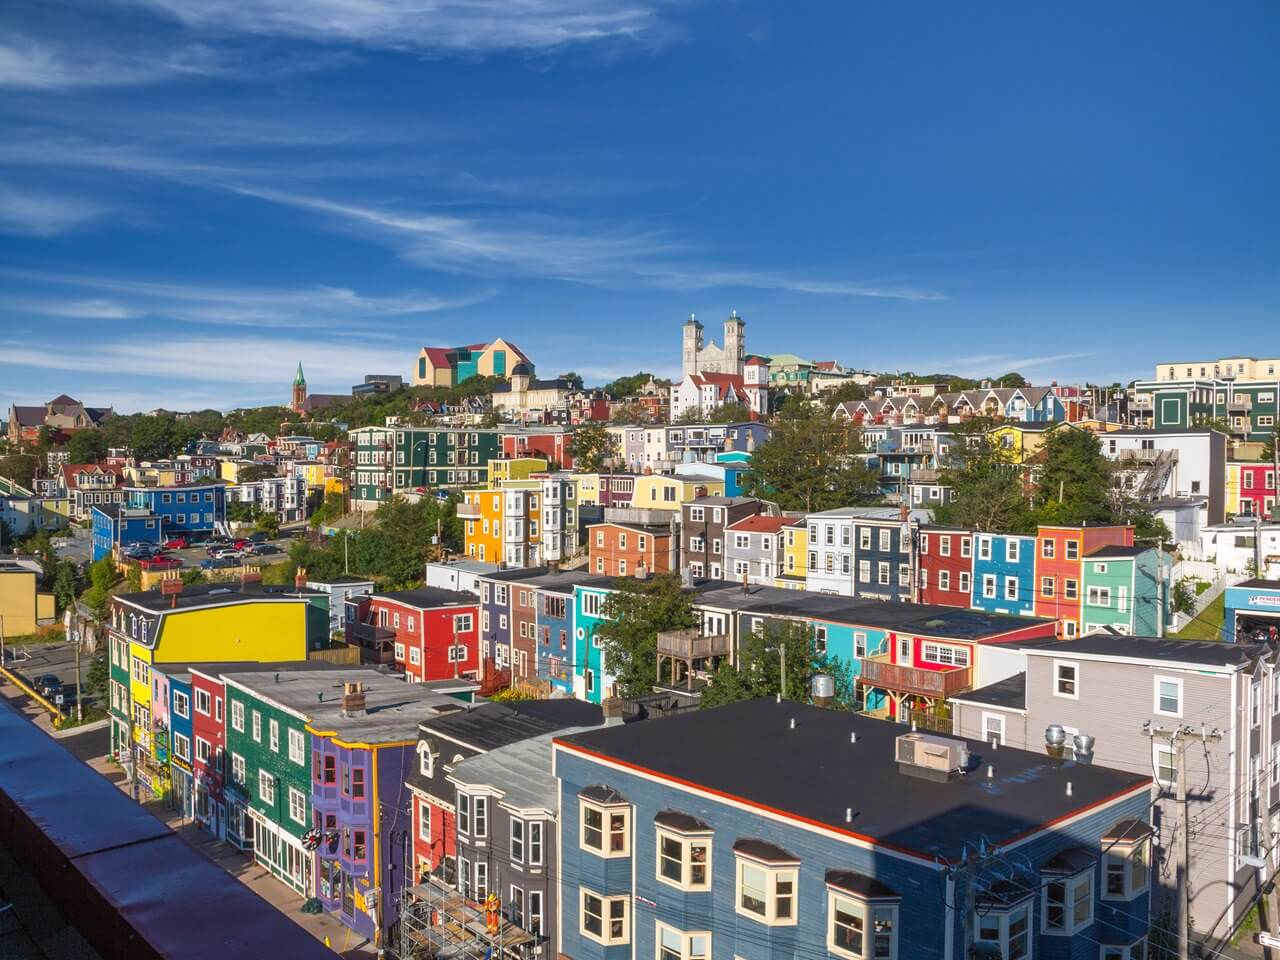 Aerial photograph of St. John's, Newfoundland